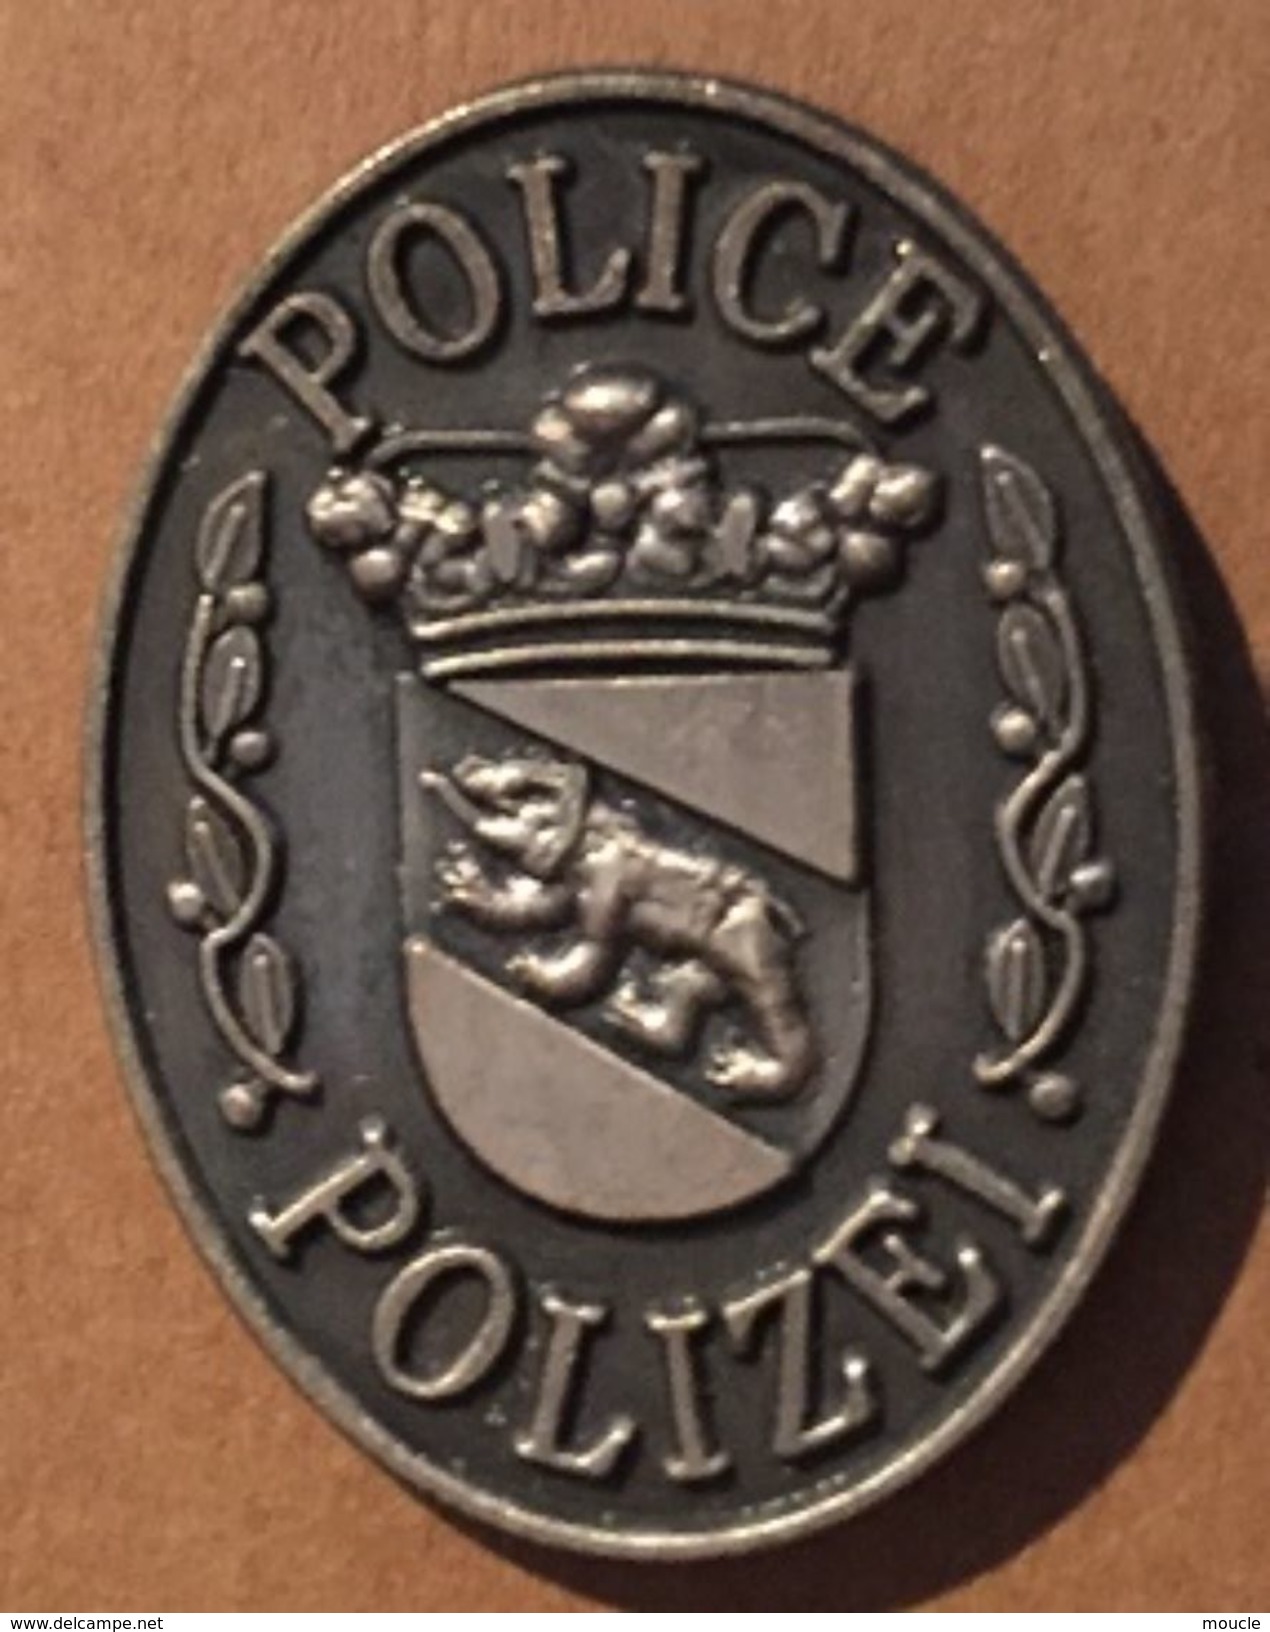 POLICE BERNOISE - BERNER POLIZEI - SUISSE - COP SWISS - SCHWEIZ - BERNE - BERN - OURS - BÄR   -     (19) - Polizei